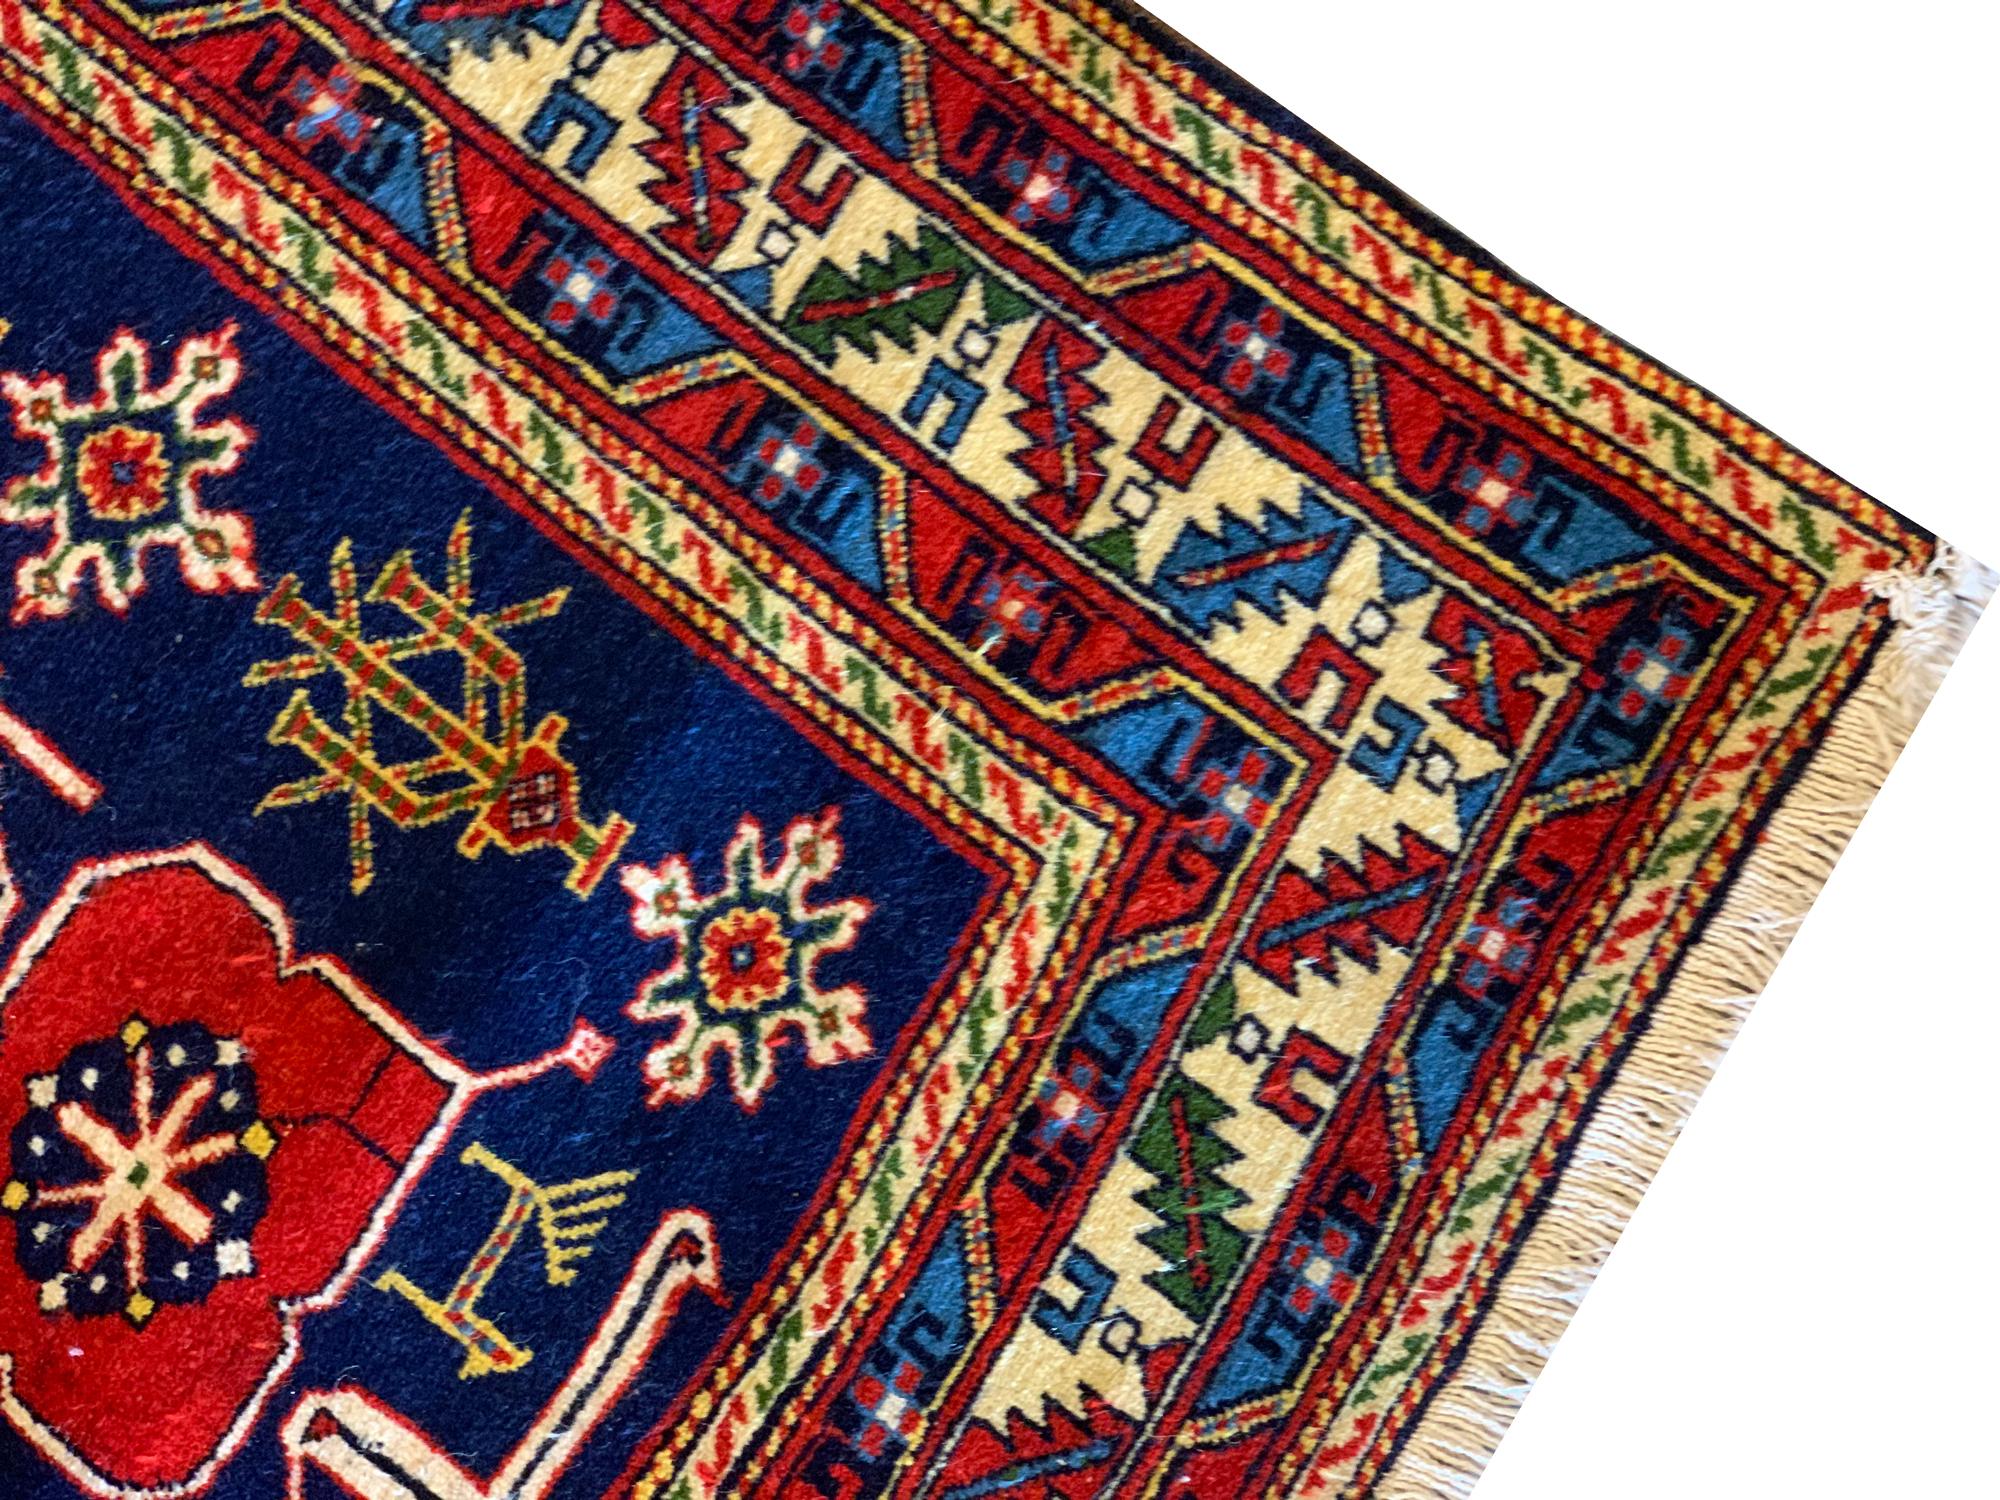 Woven Collectible KaraKashli Rug Antique Shirvan Rug Handwoven Wool Carpet For Sale